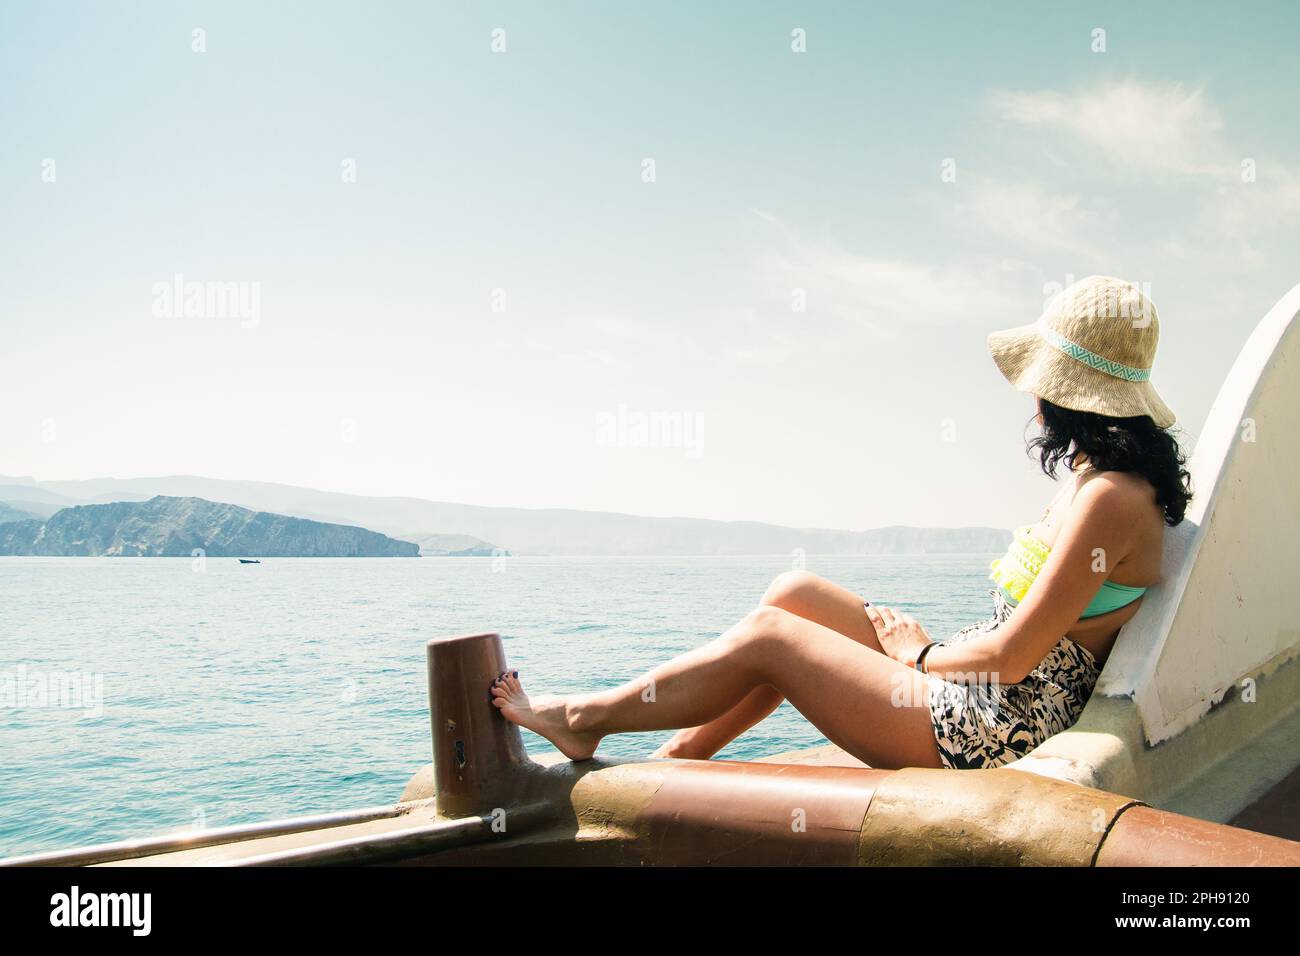 Tourist traveler woman travel enjoying ride on high end speed boat on summer vacation. Elegant black bikini, long hair and sun tanned body. Oman middl Stock Photo